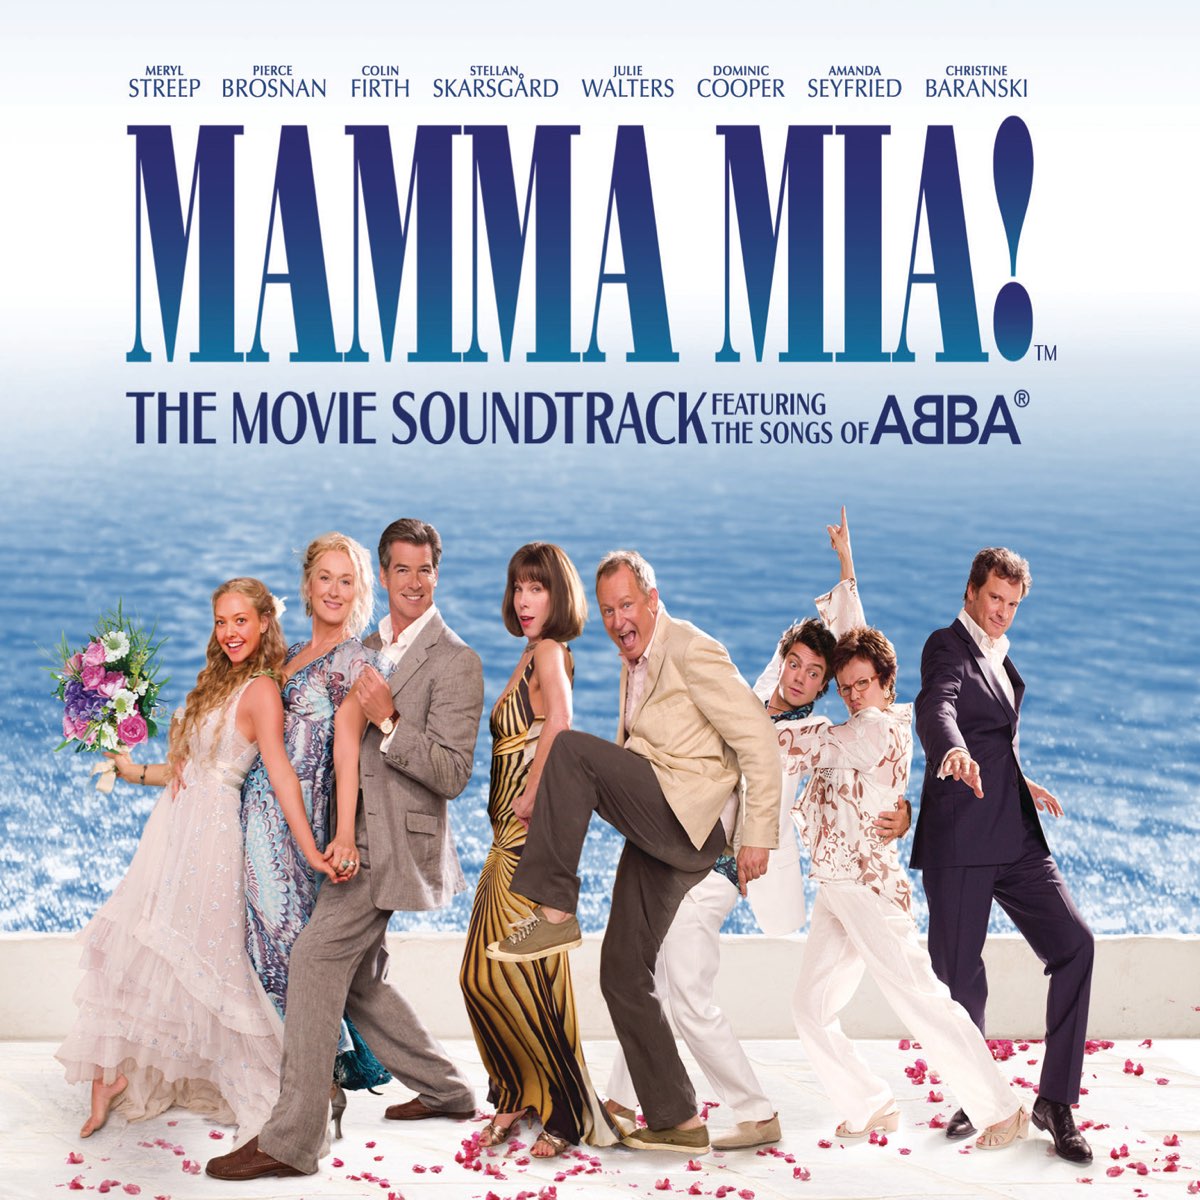 ‎Mamma Mia! (The Movie Soundtrack feat. the Songs of ABBA) [Bonus Track  Version] - Album by Benny Andersson, Björn Ulvaeus, Meryl Streep & Amanda  Seyfried - Apple Music